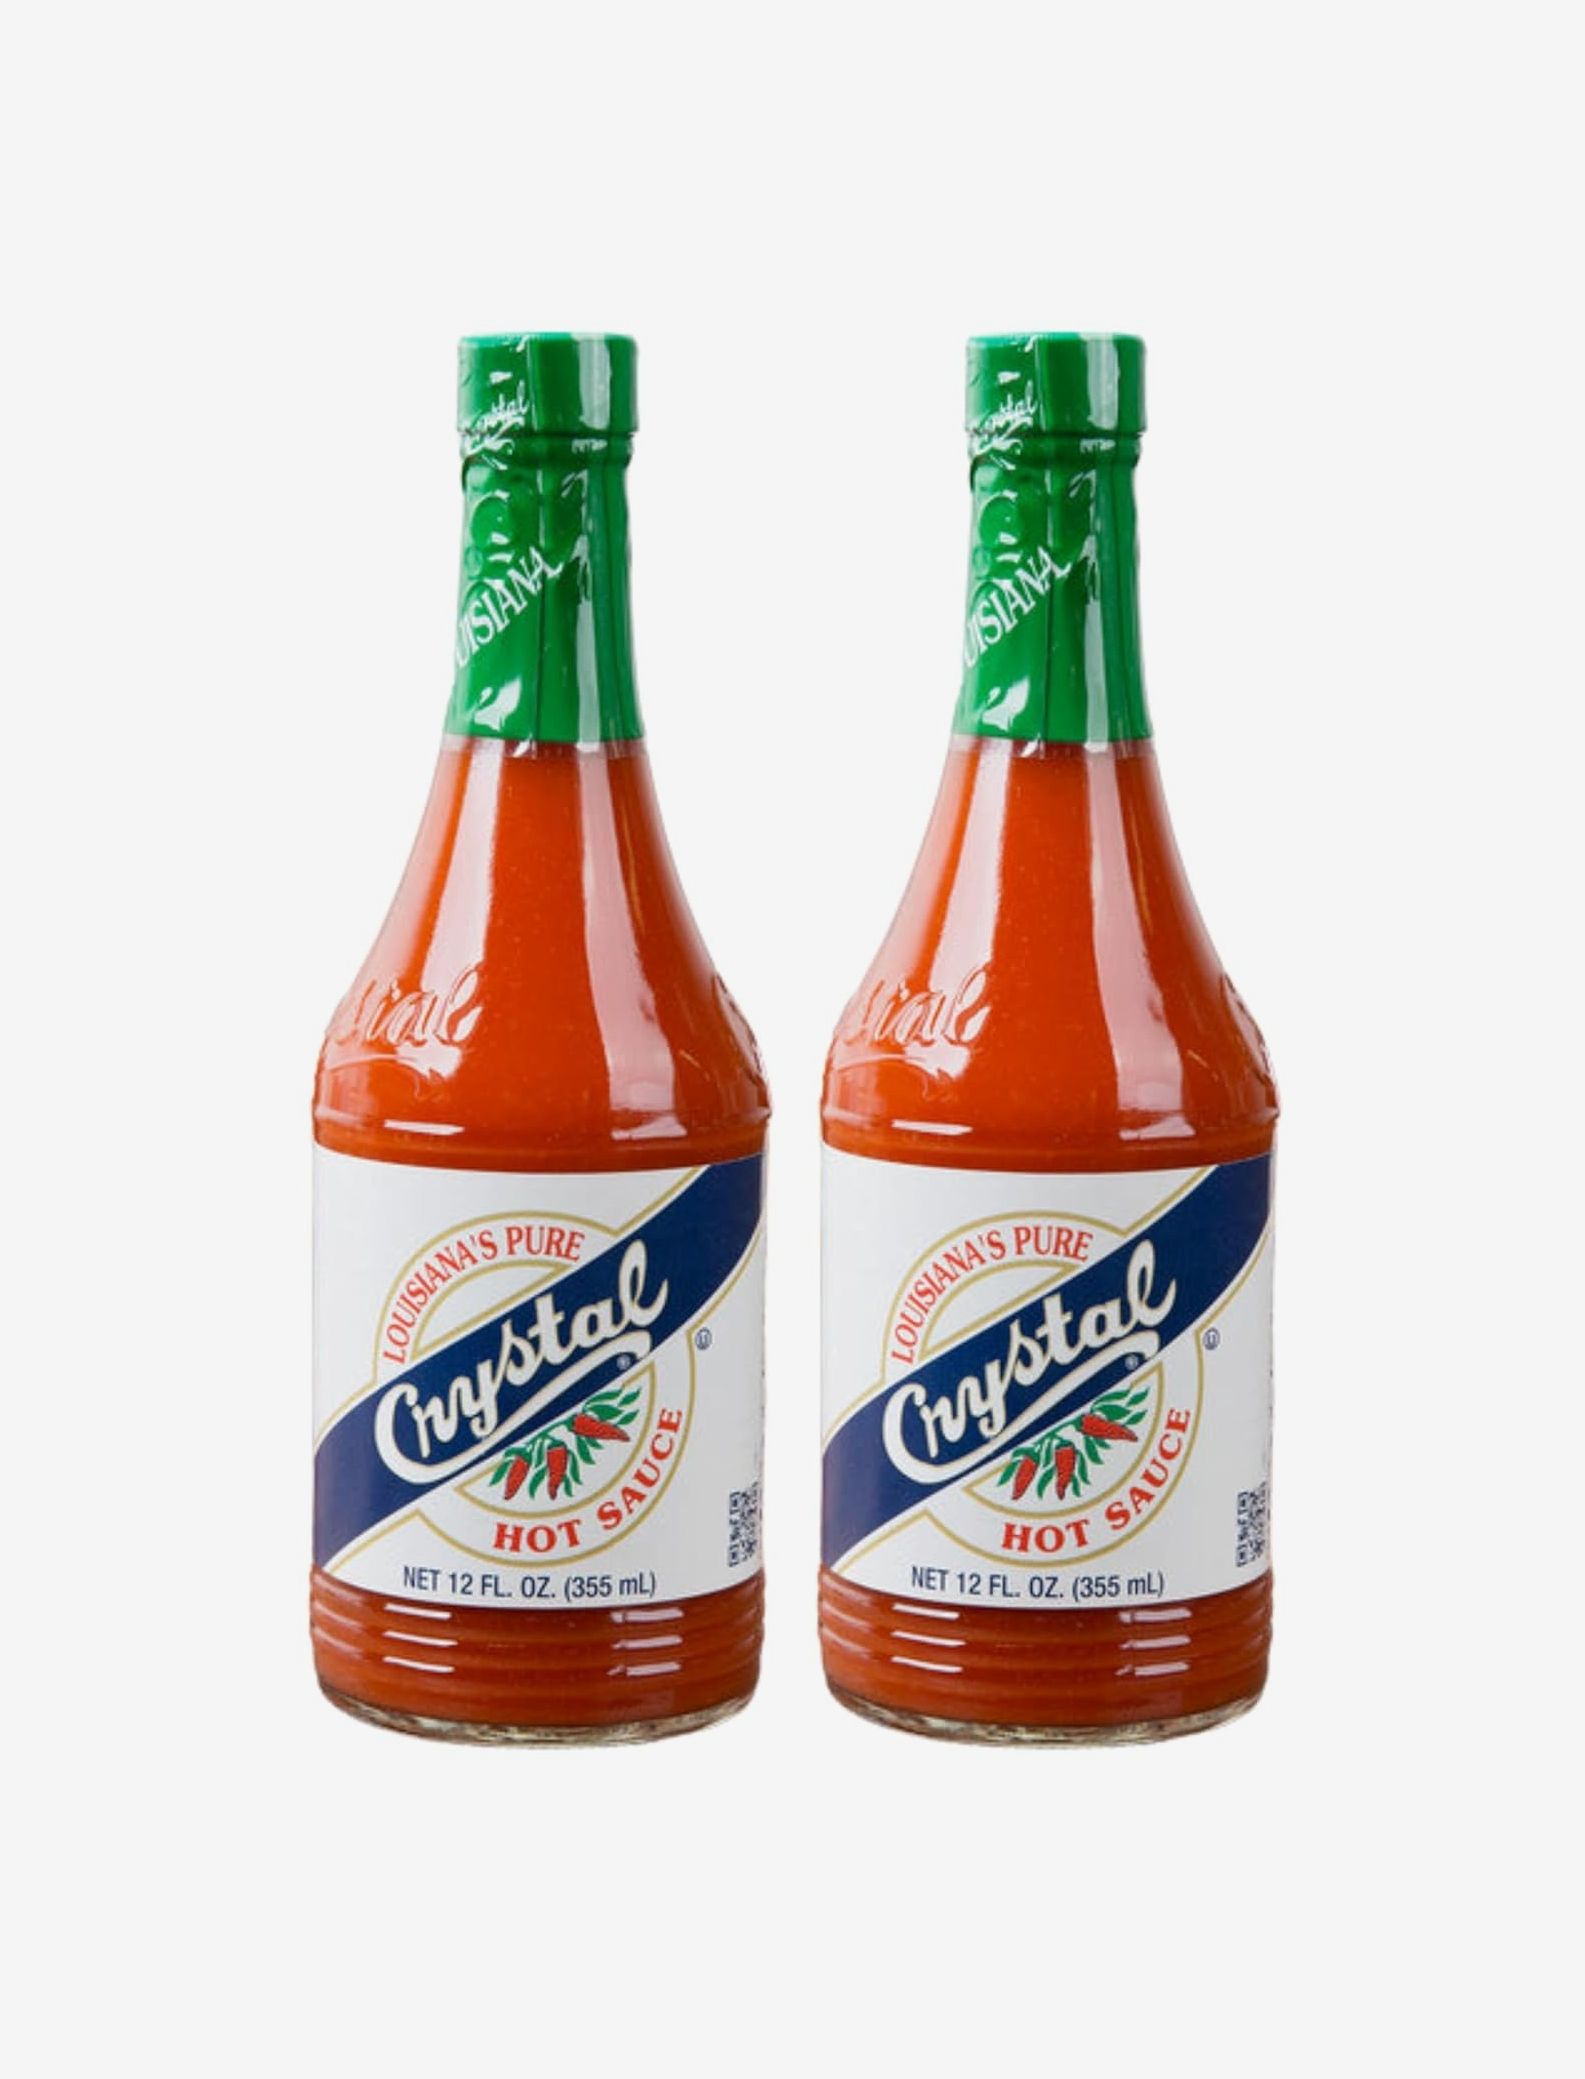 Louisiana Brand Hot Sauce, Original Hot Sauce 12 Ounce (Pack of 2)